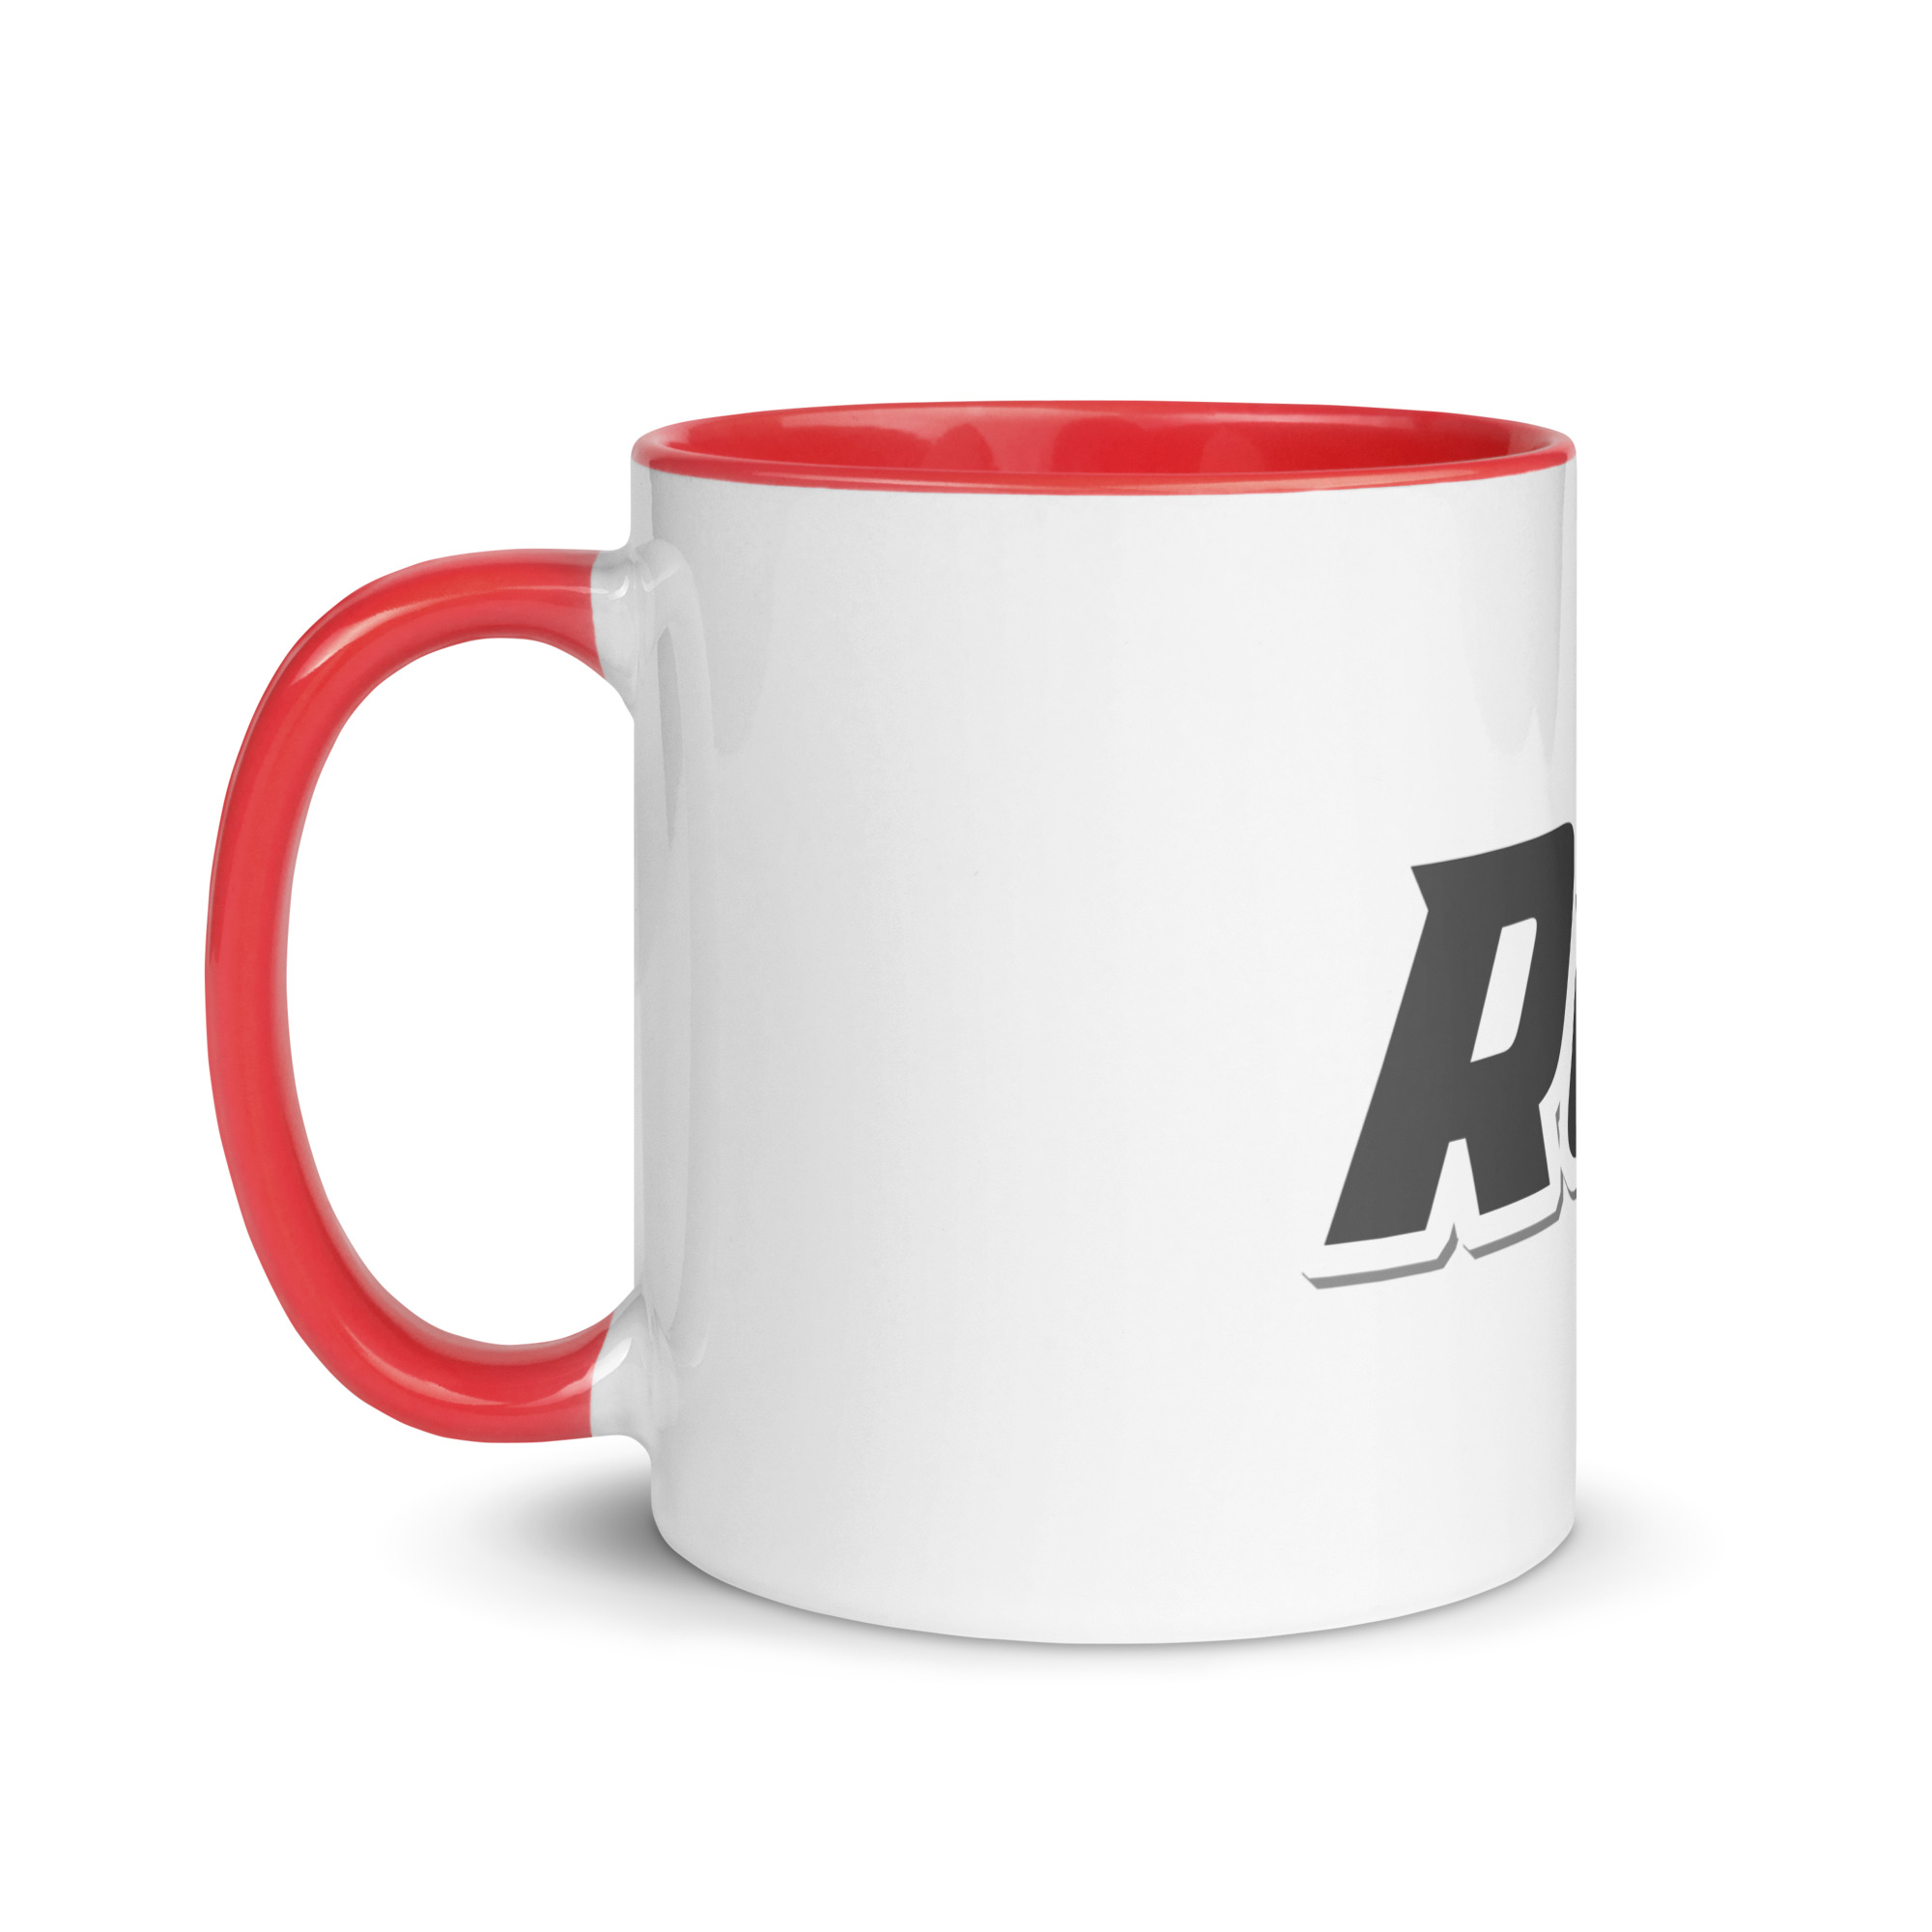 white-ceramic-mug-with-color-inside-red-11-oz-left-6525b6484c23c.jpg